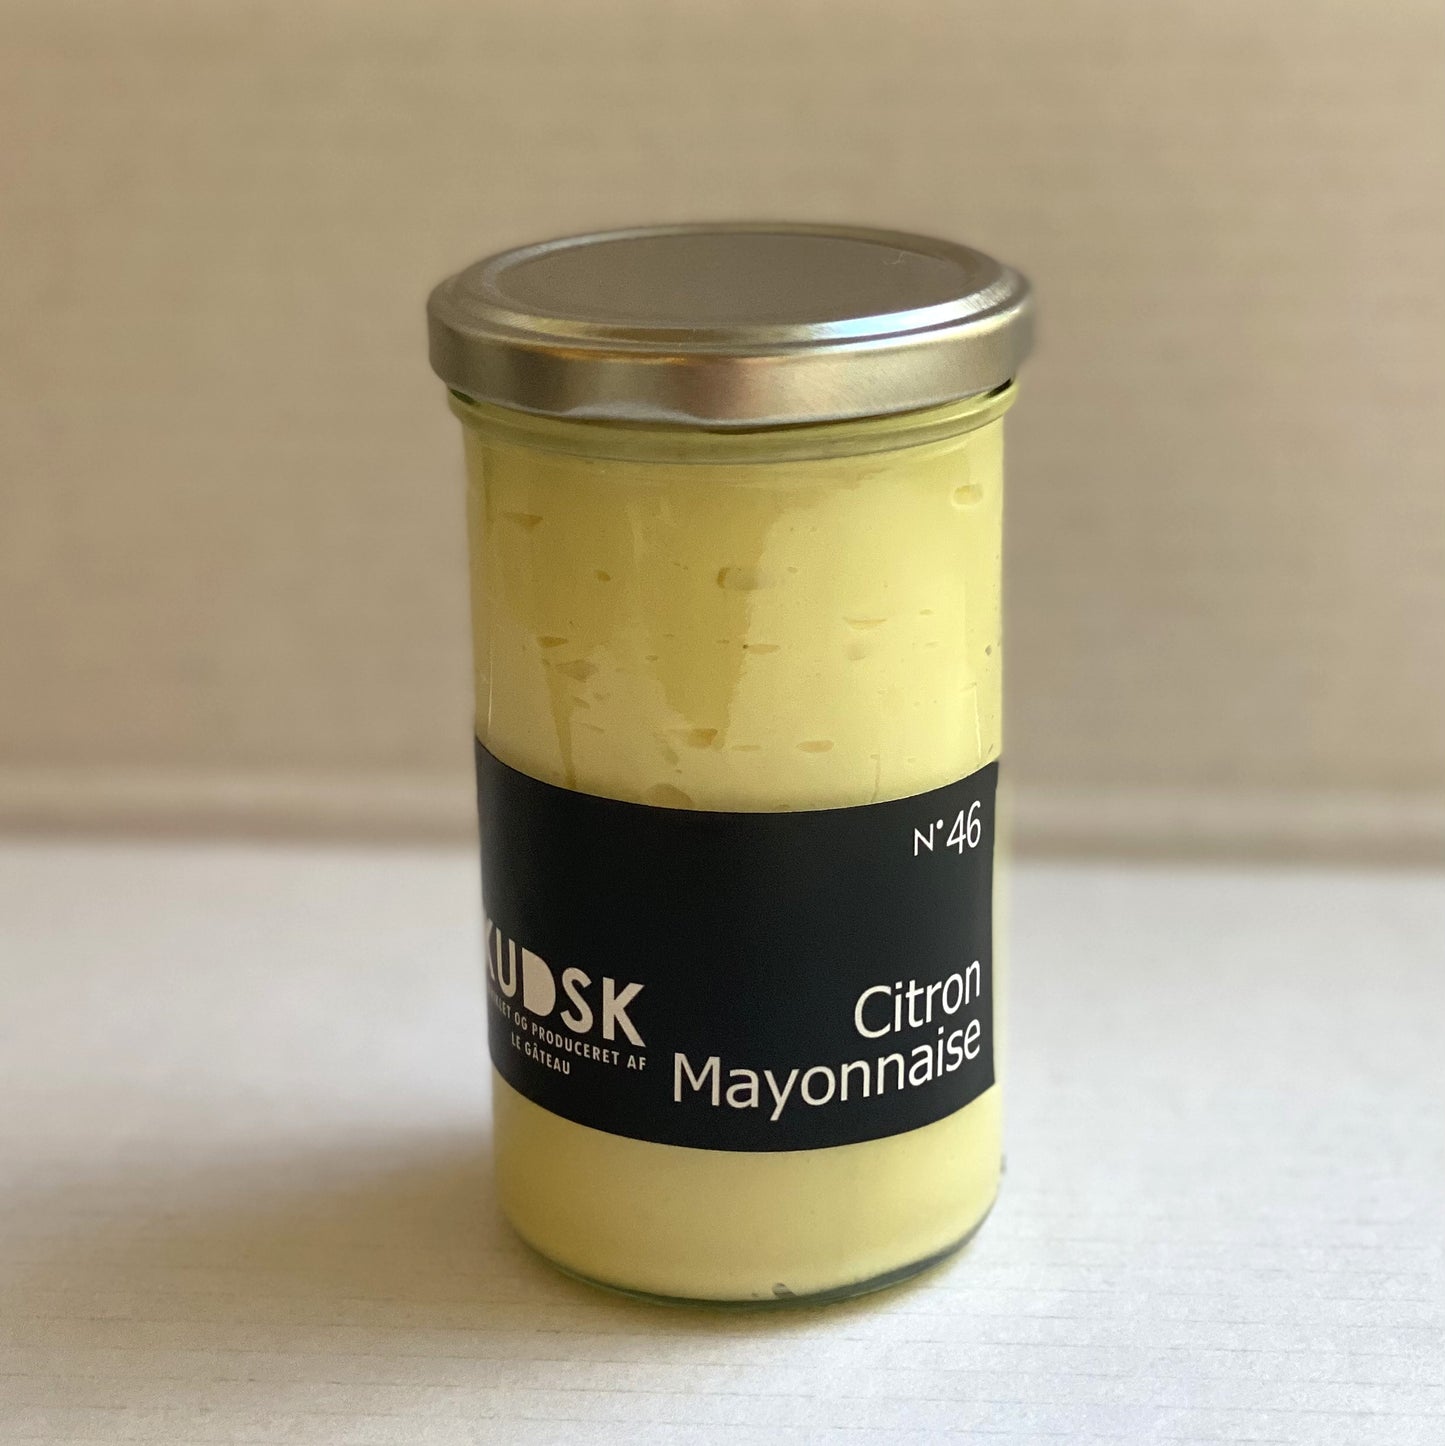 KUDSK - No 46 Citron mayonnaise